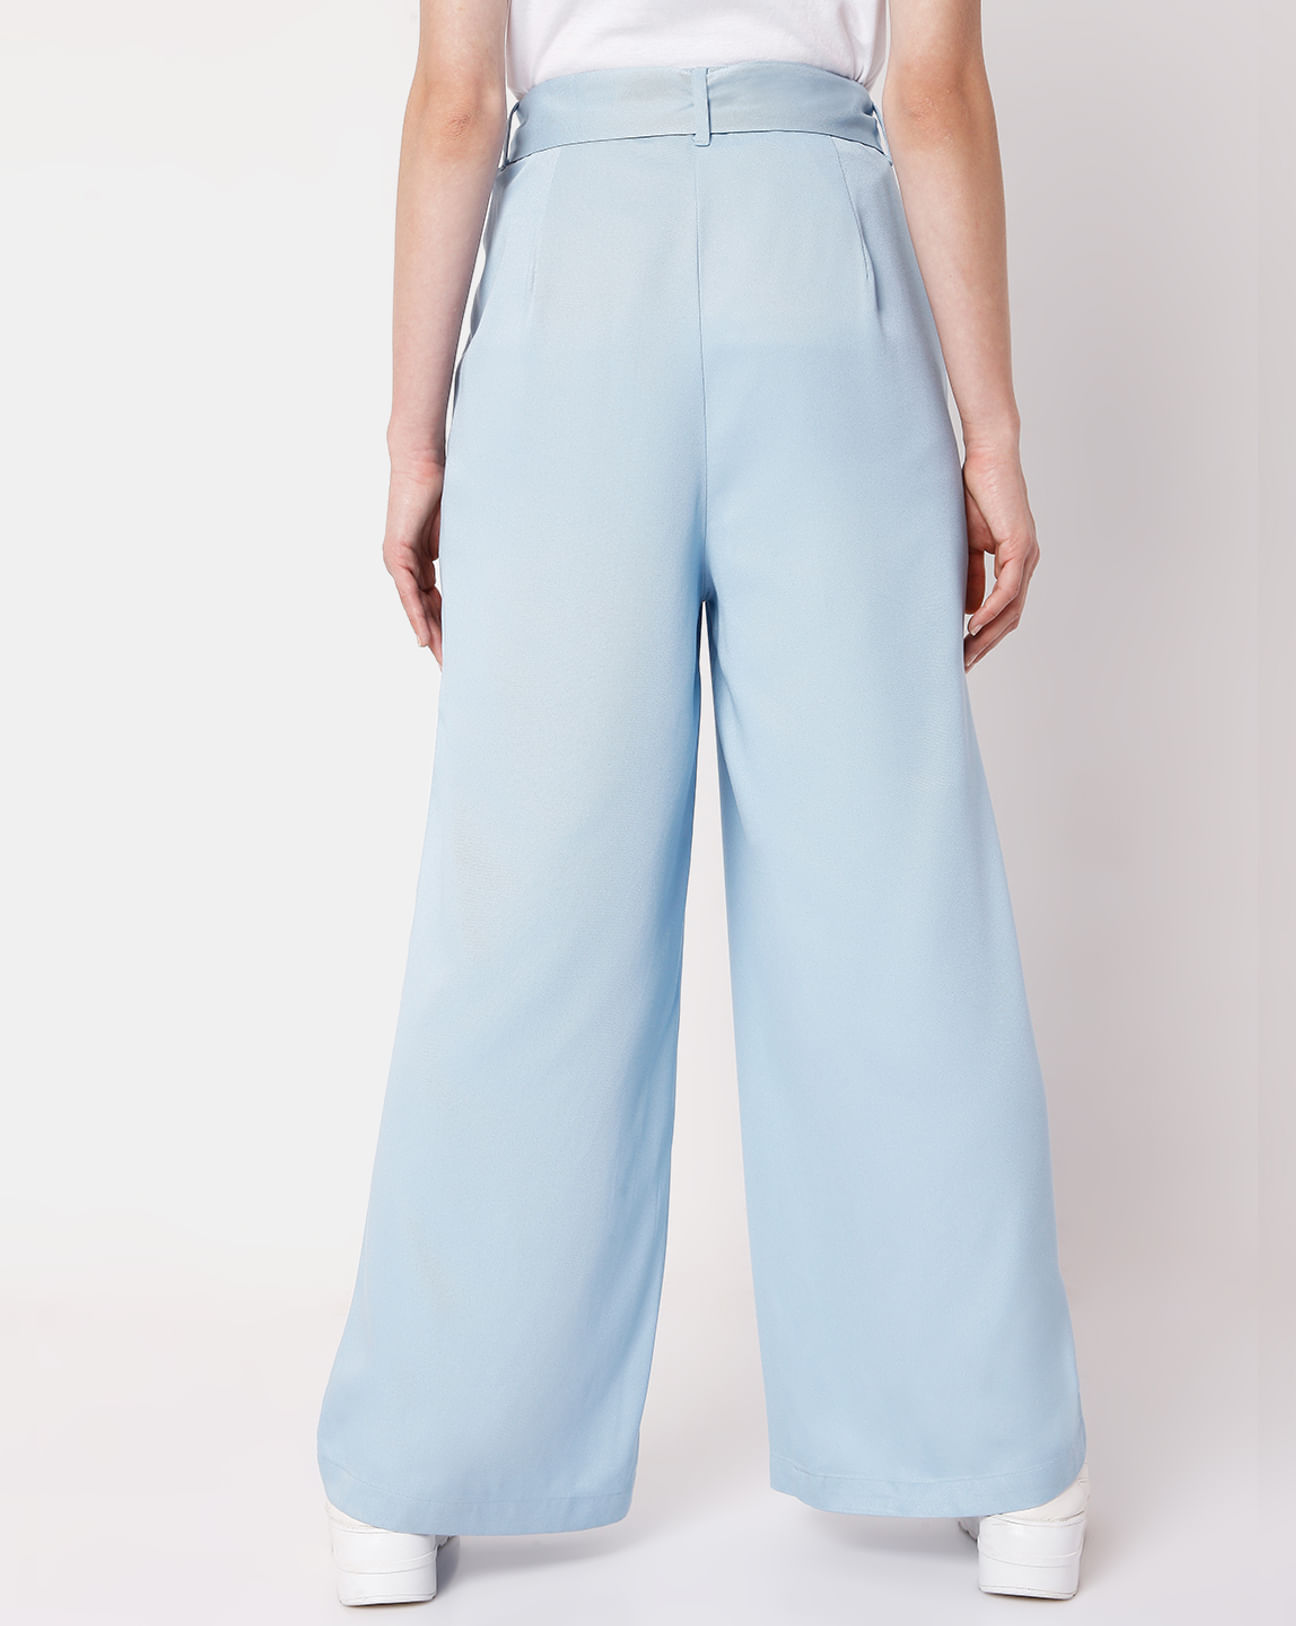 Buy Blue High Waist Pants for Women Online